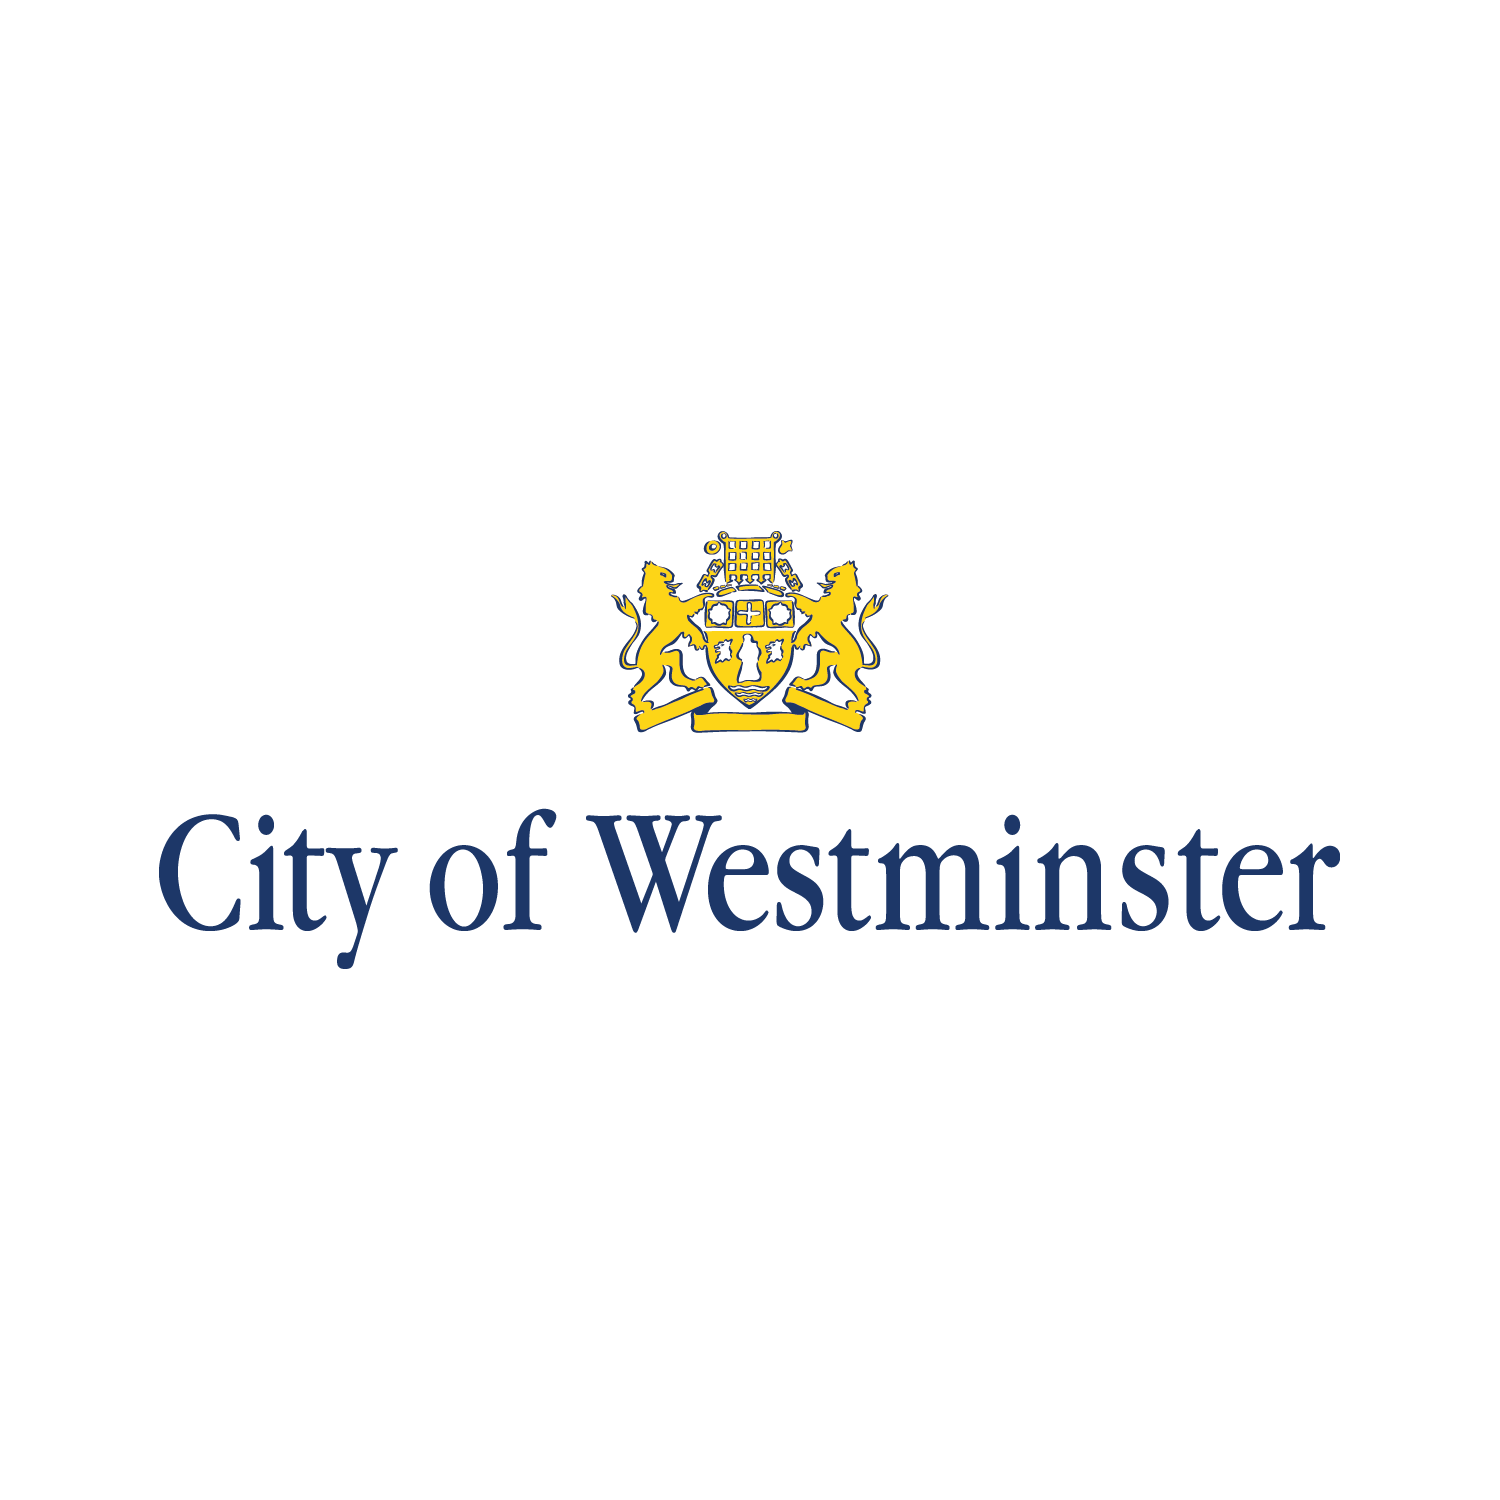 Westminster Logo - City of Westminster